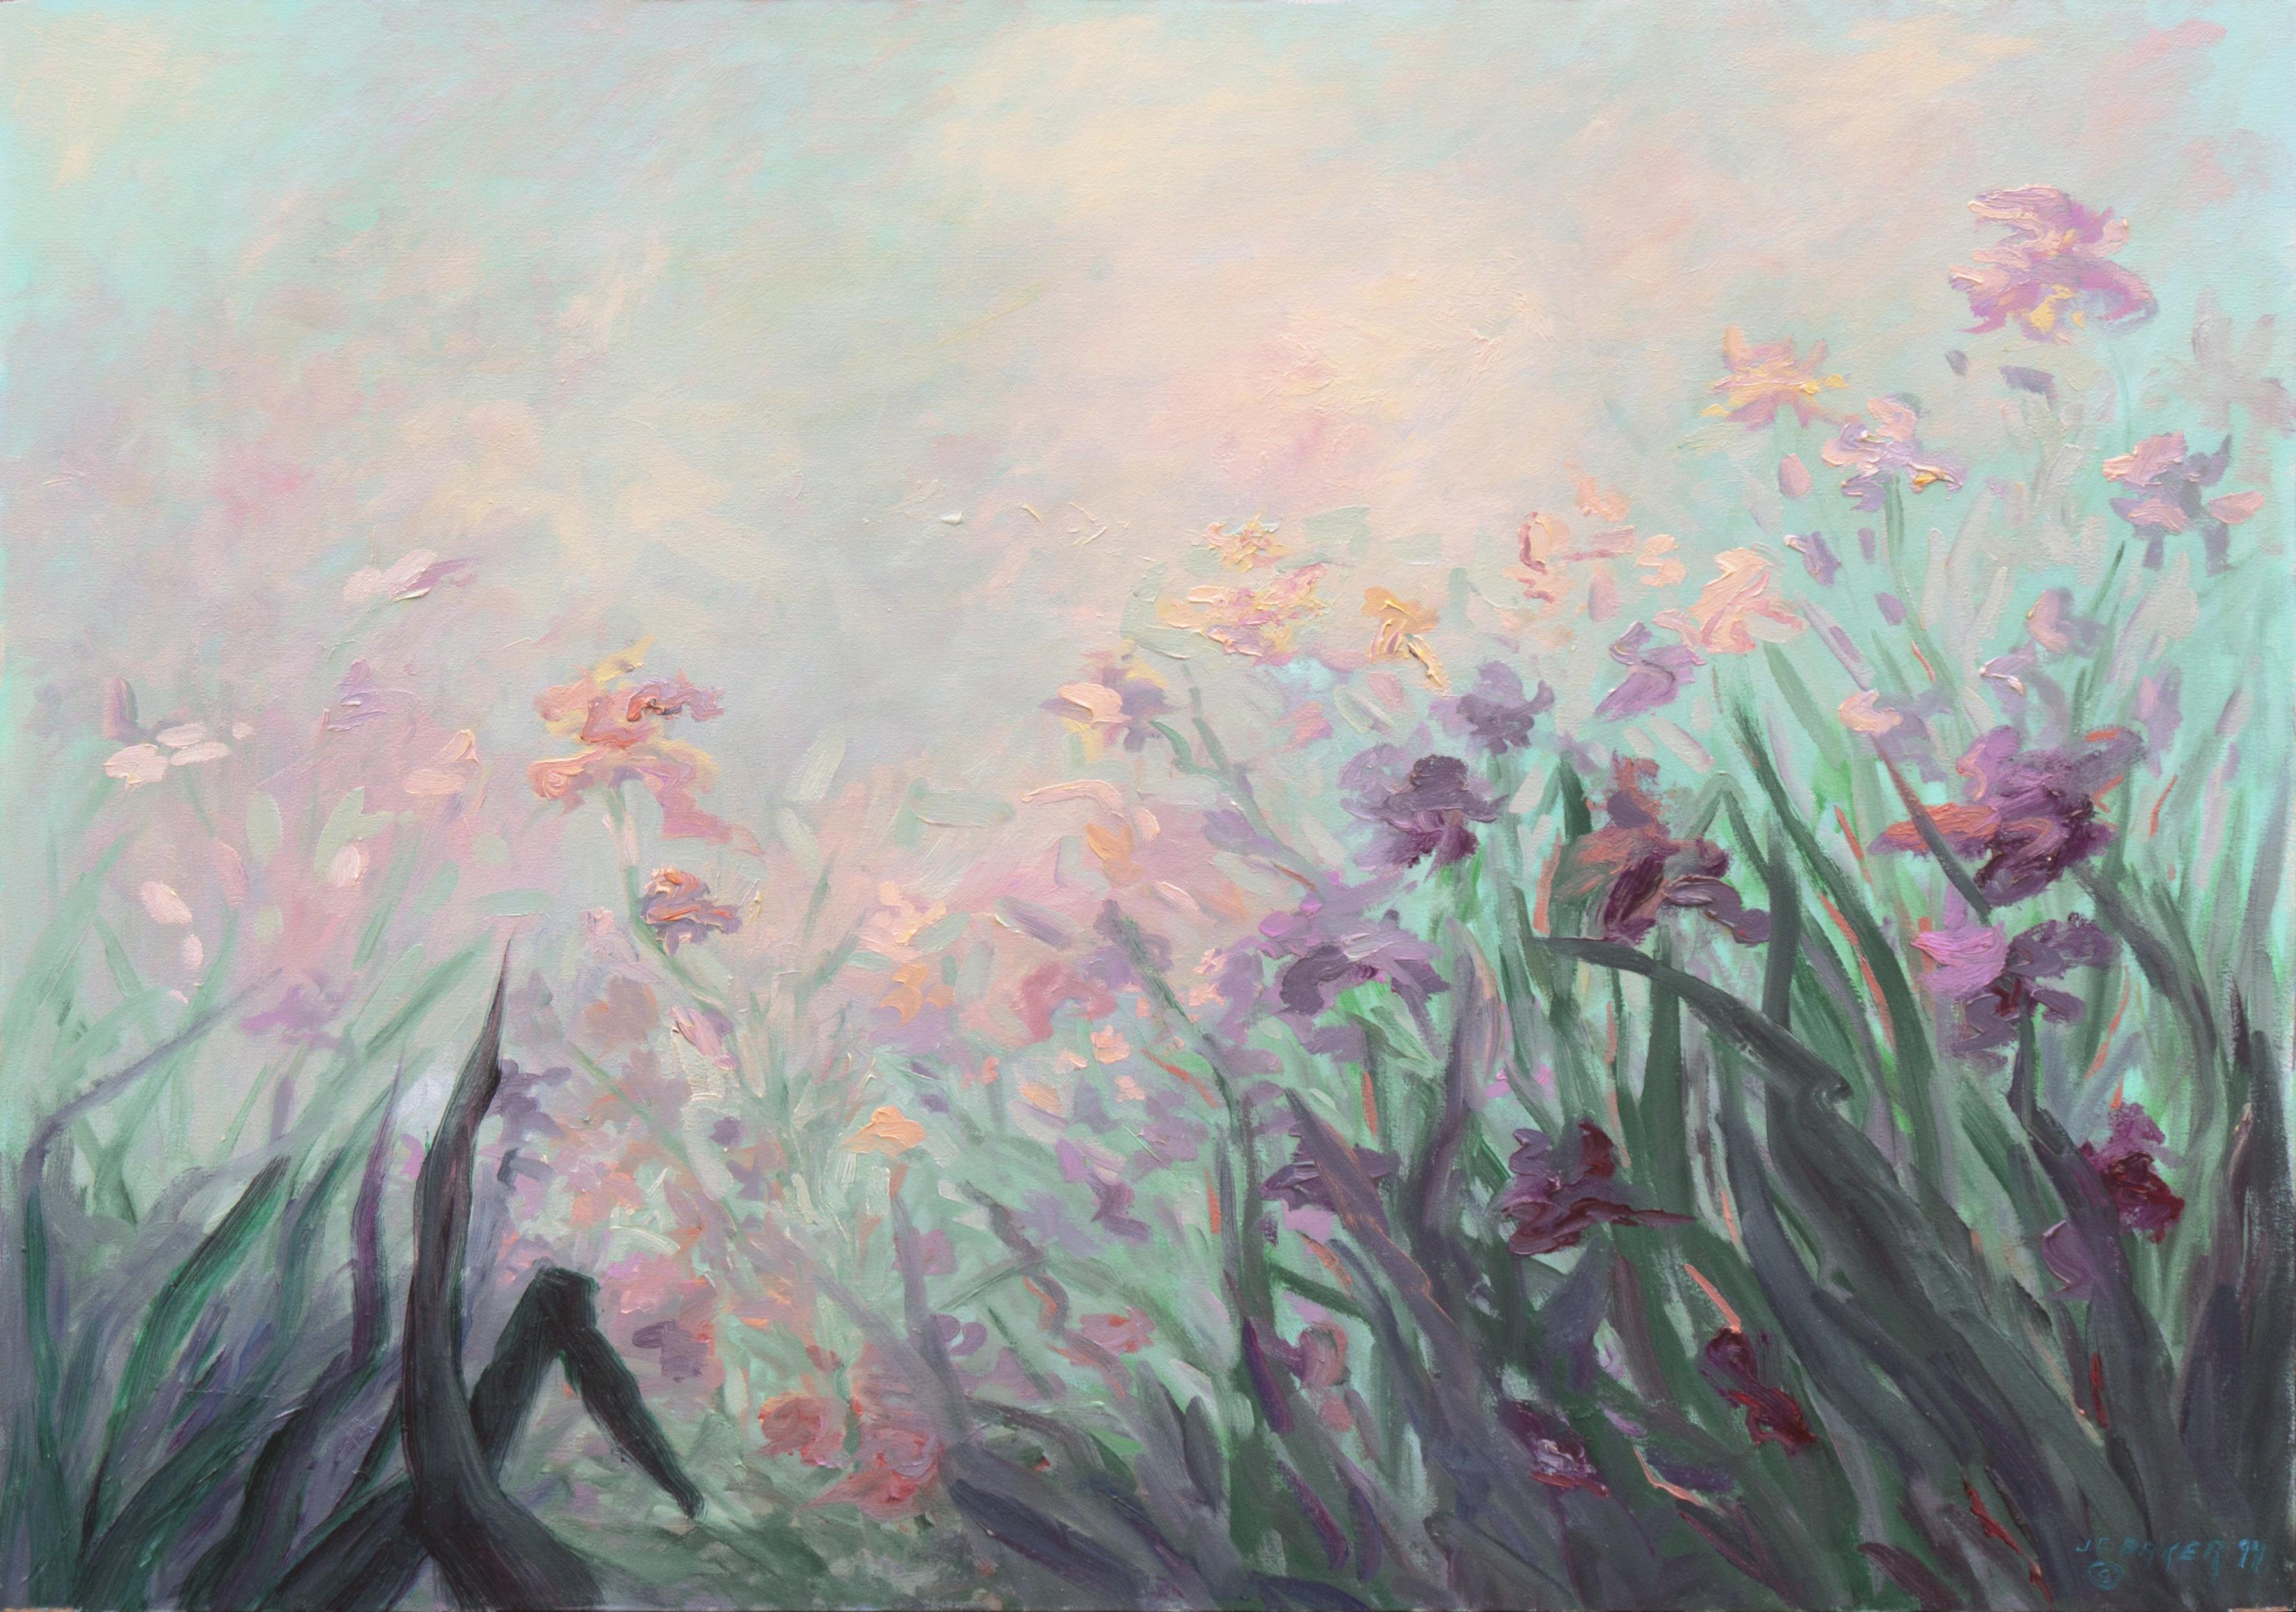 J. C. Baker Landscape Painting - 'Irises in a Sunset Breeze', Large Impressionist Botanical Oil, American School